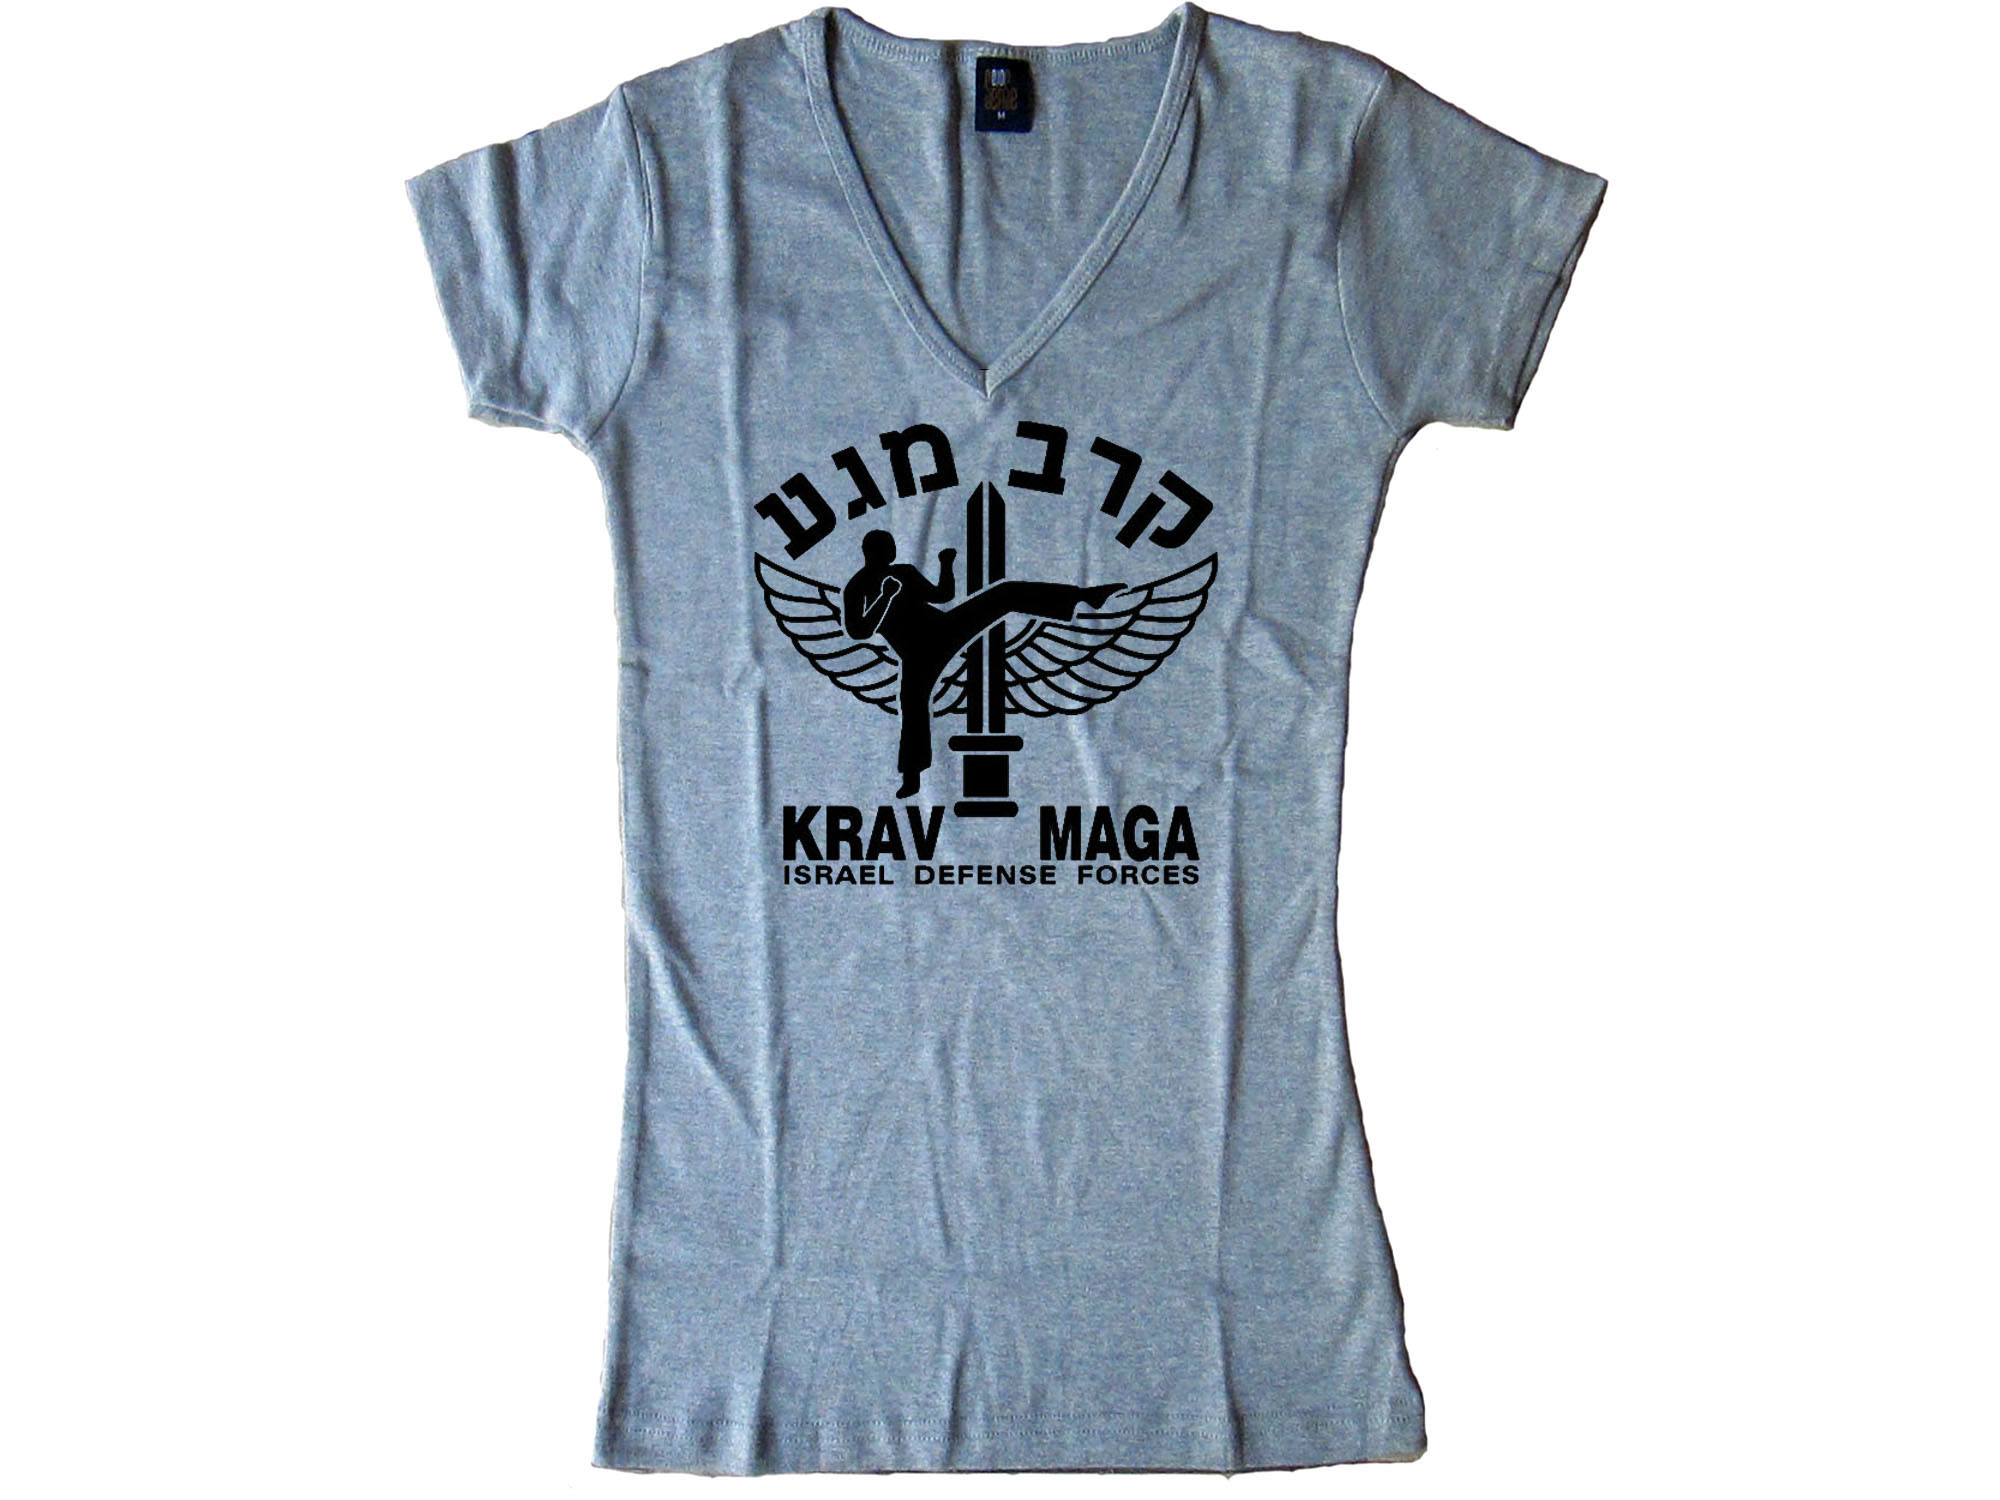 Krav maga emblem women or junior gray t-shirt